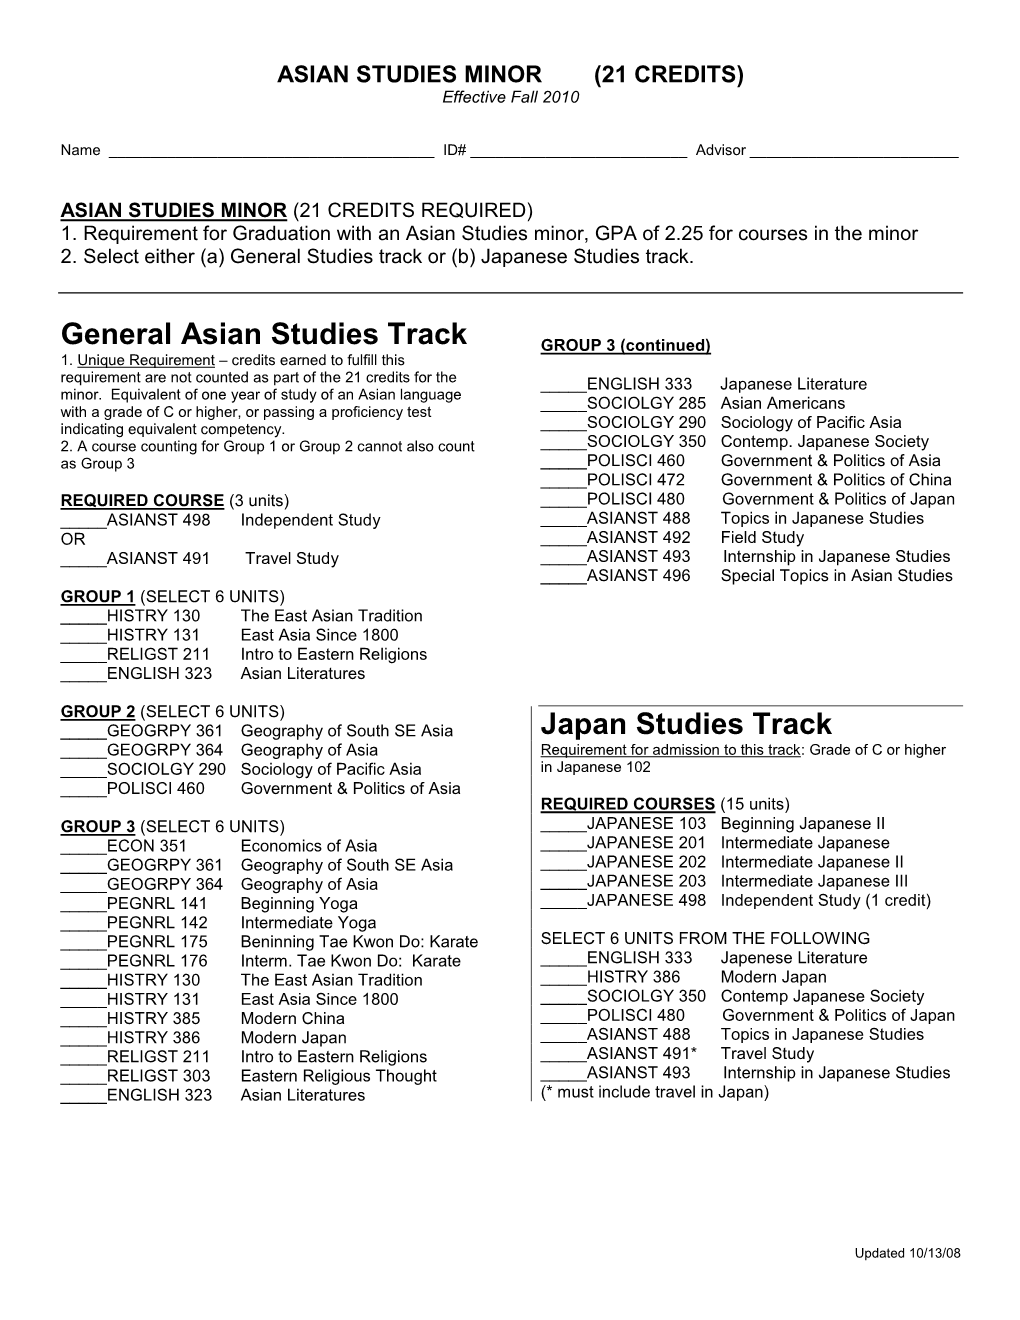 ASIAN STUDIES MINOR (21 CREDITS) Effective Fall 2010